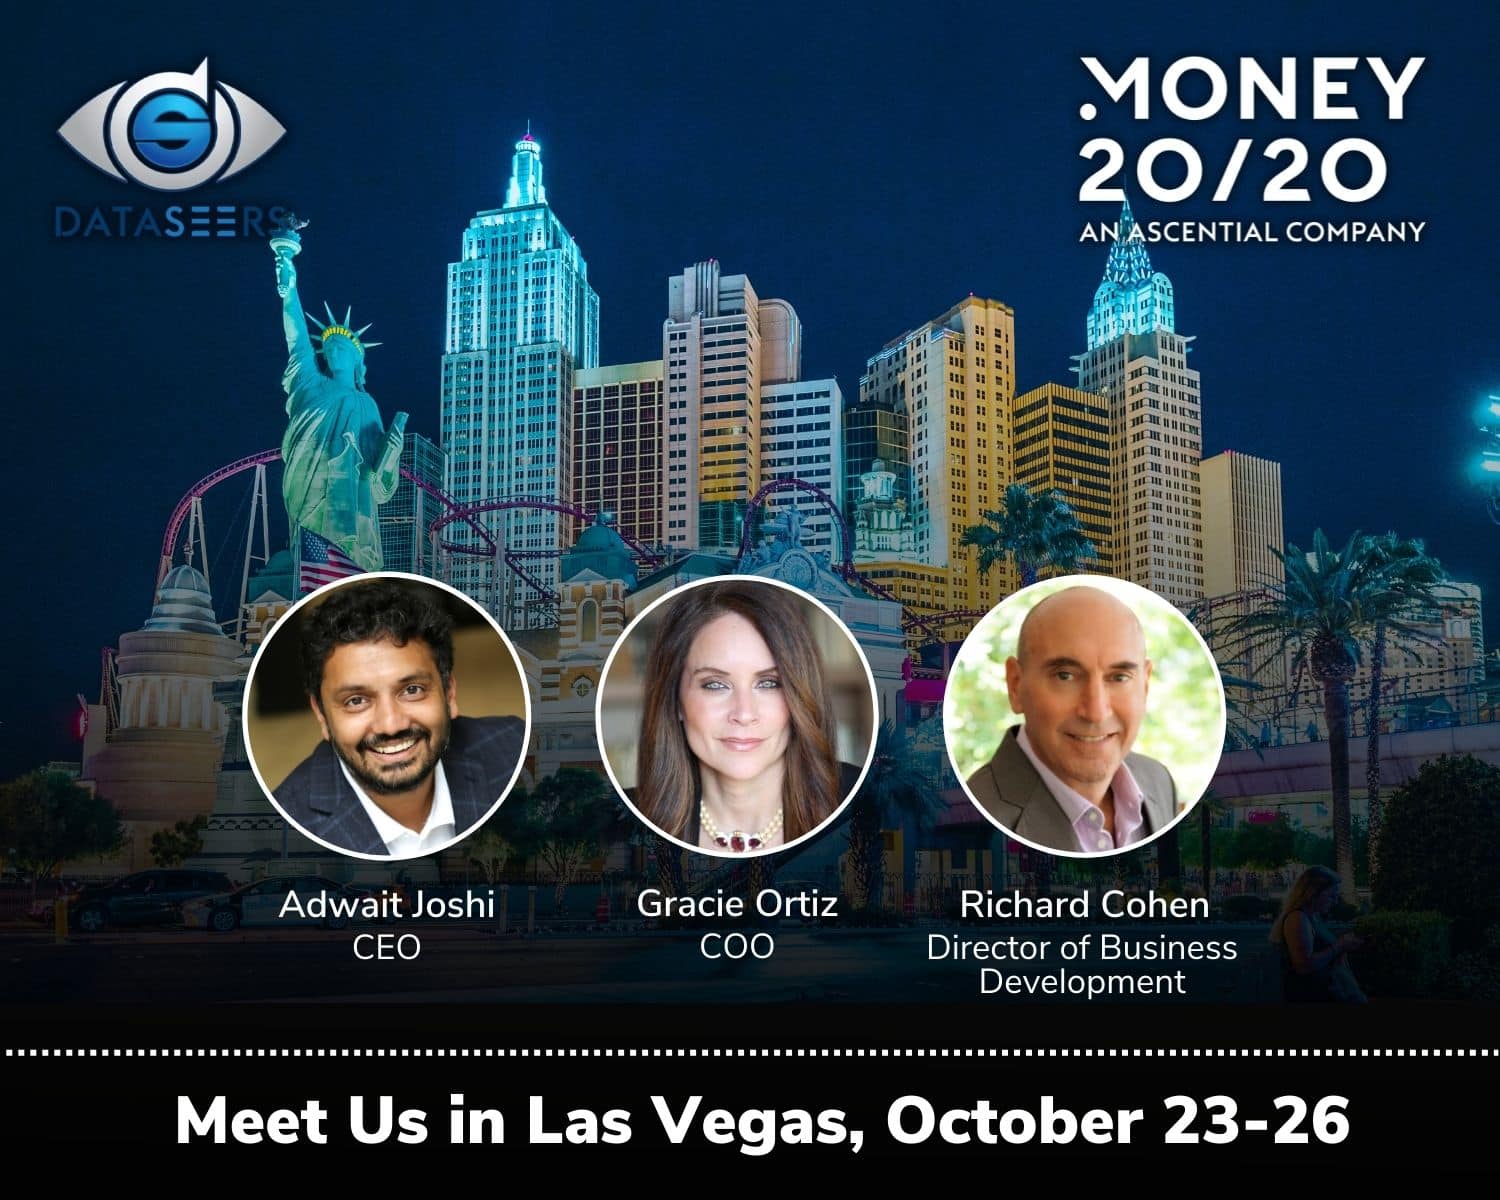 Let's Meet in Las Vegas During Money 2020 DataSeers